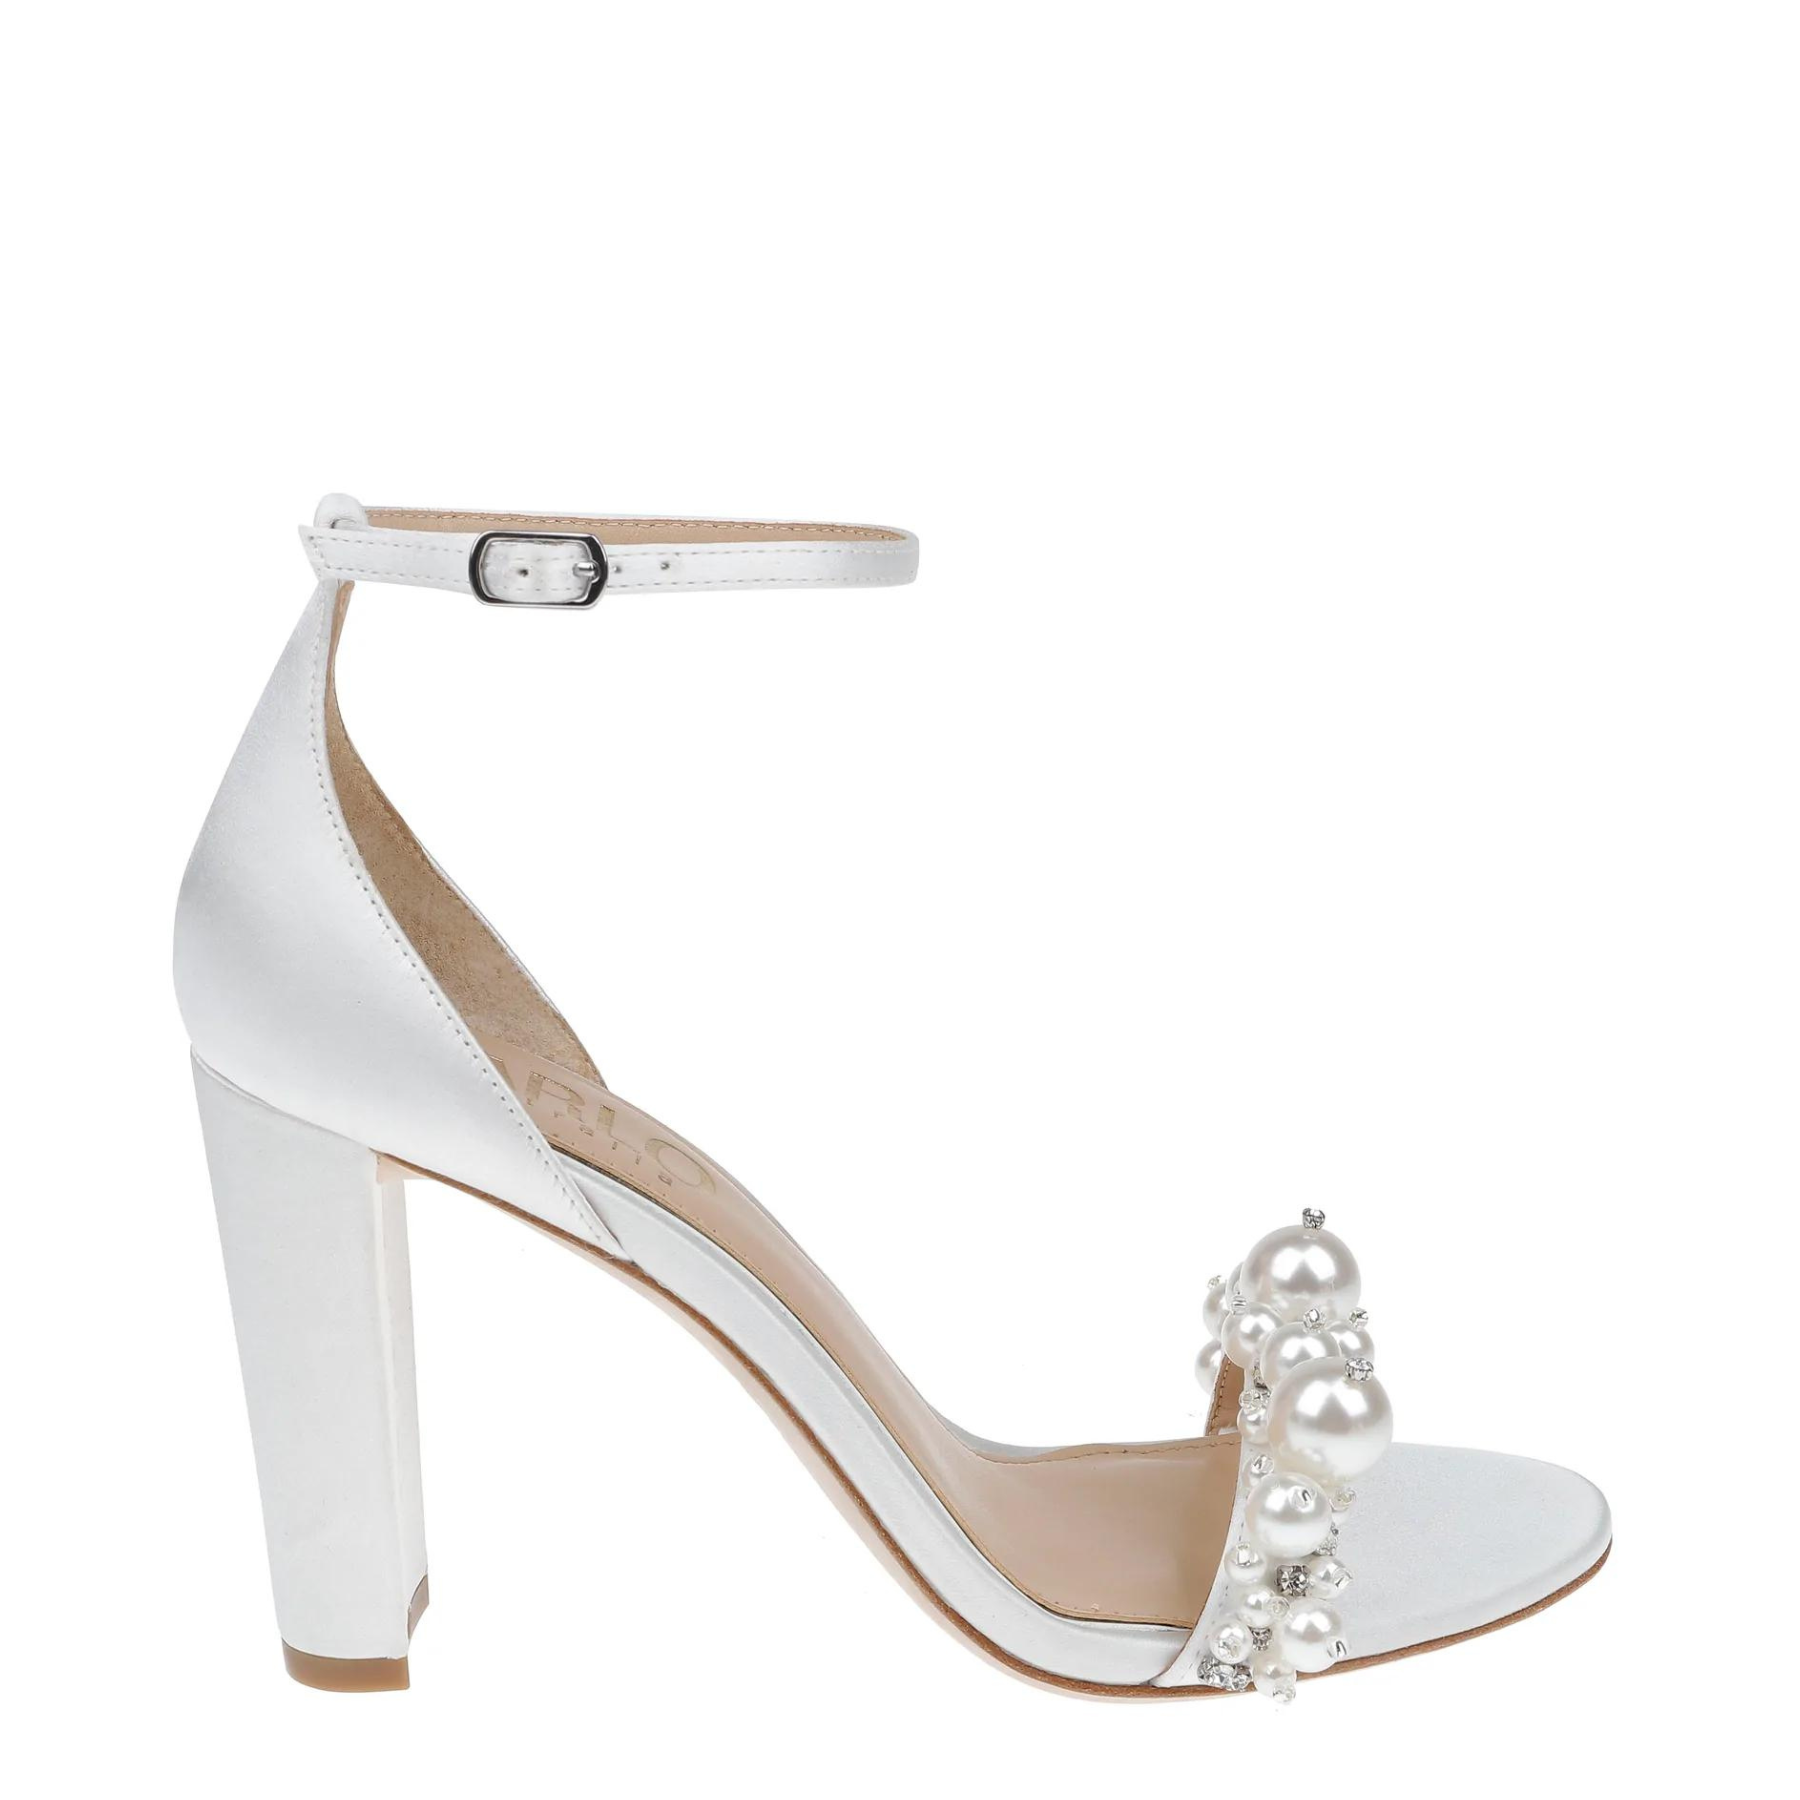 Ankle Strap Block Heel Sandals | Heels, Fashion heels, Shoes heels classy